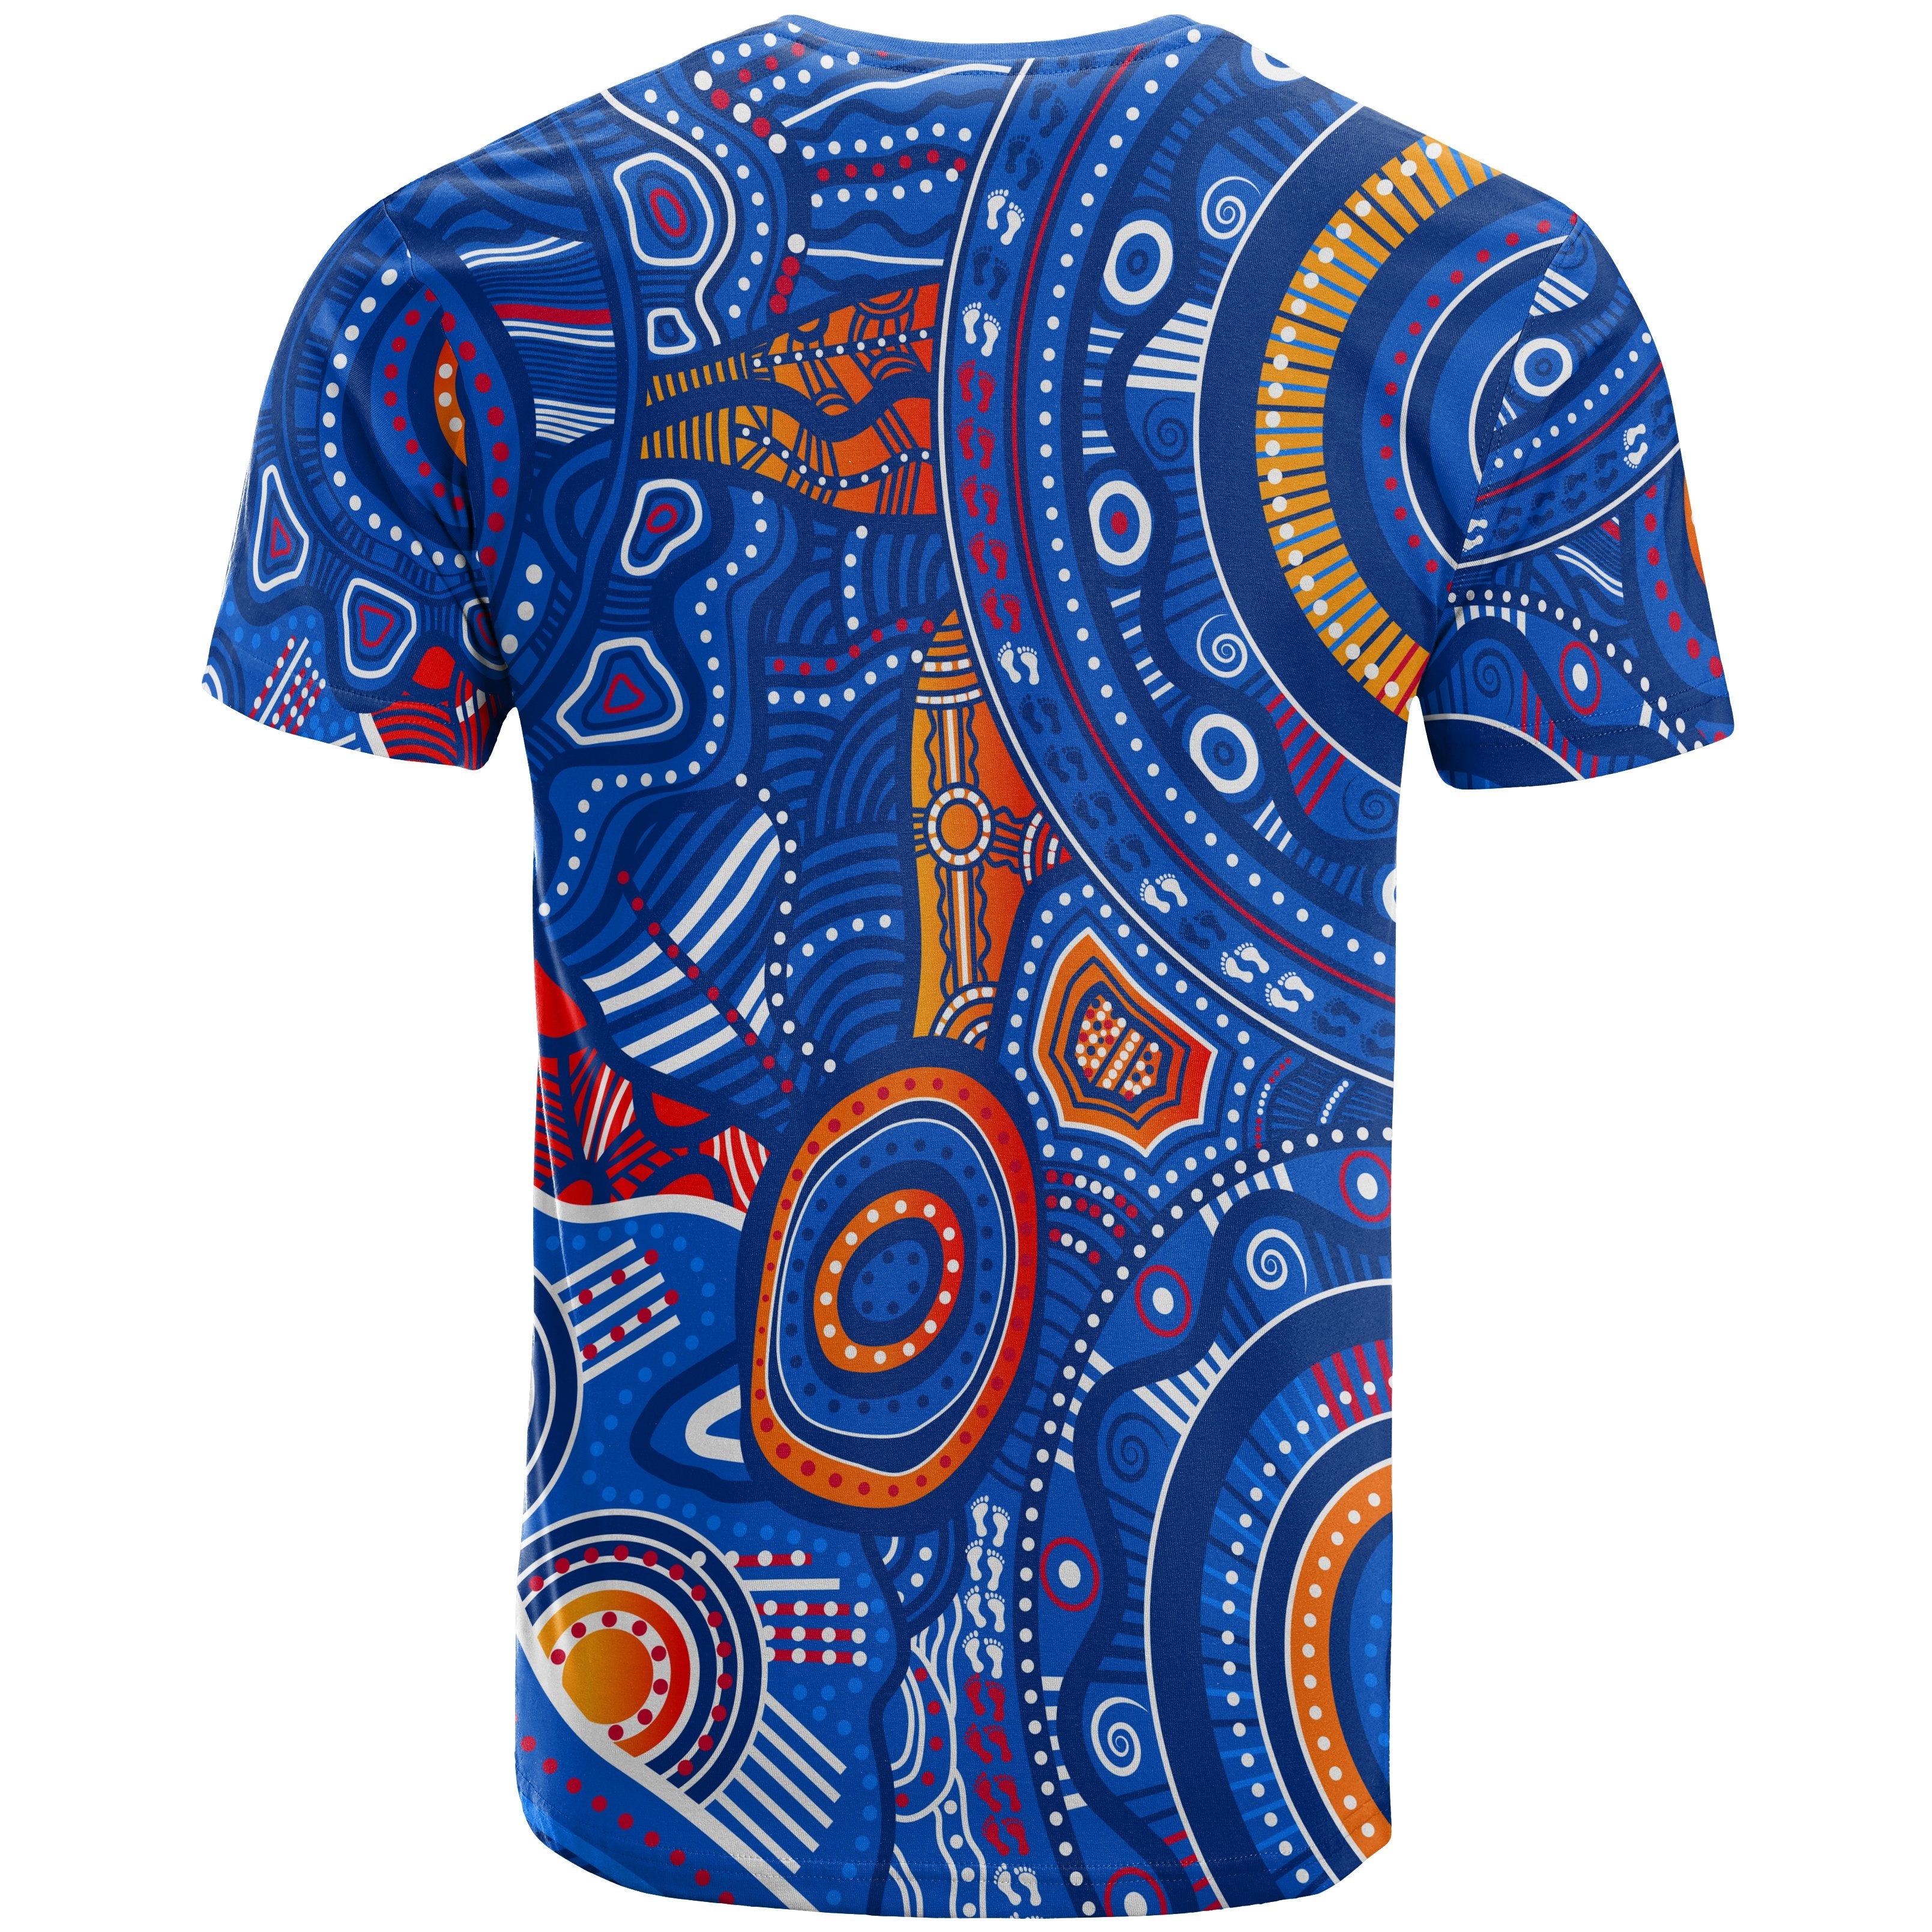 kid-aboriginal-t-shirt-indigenous-footprint-patterns-blue-color